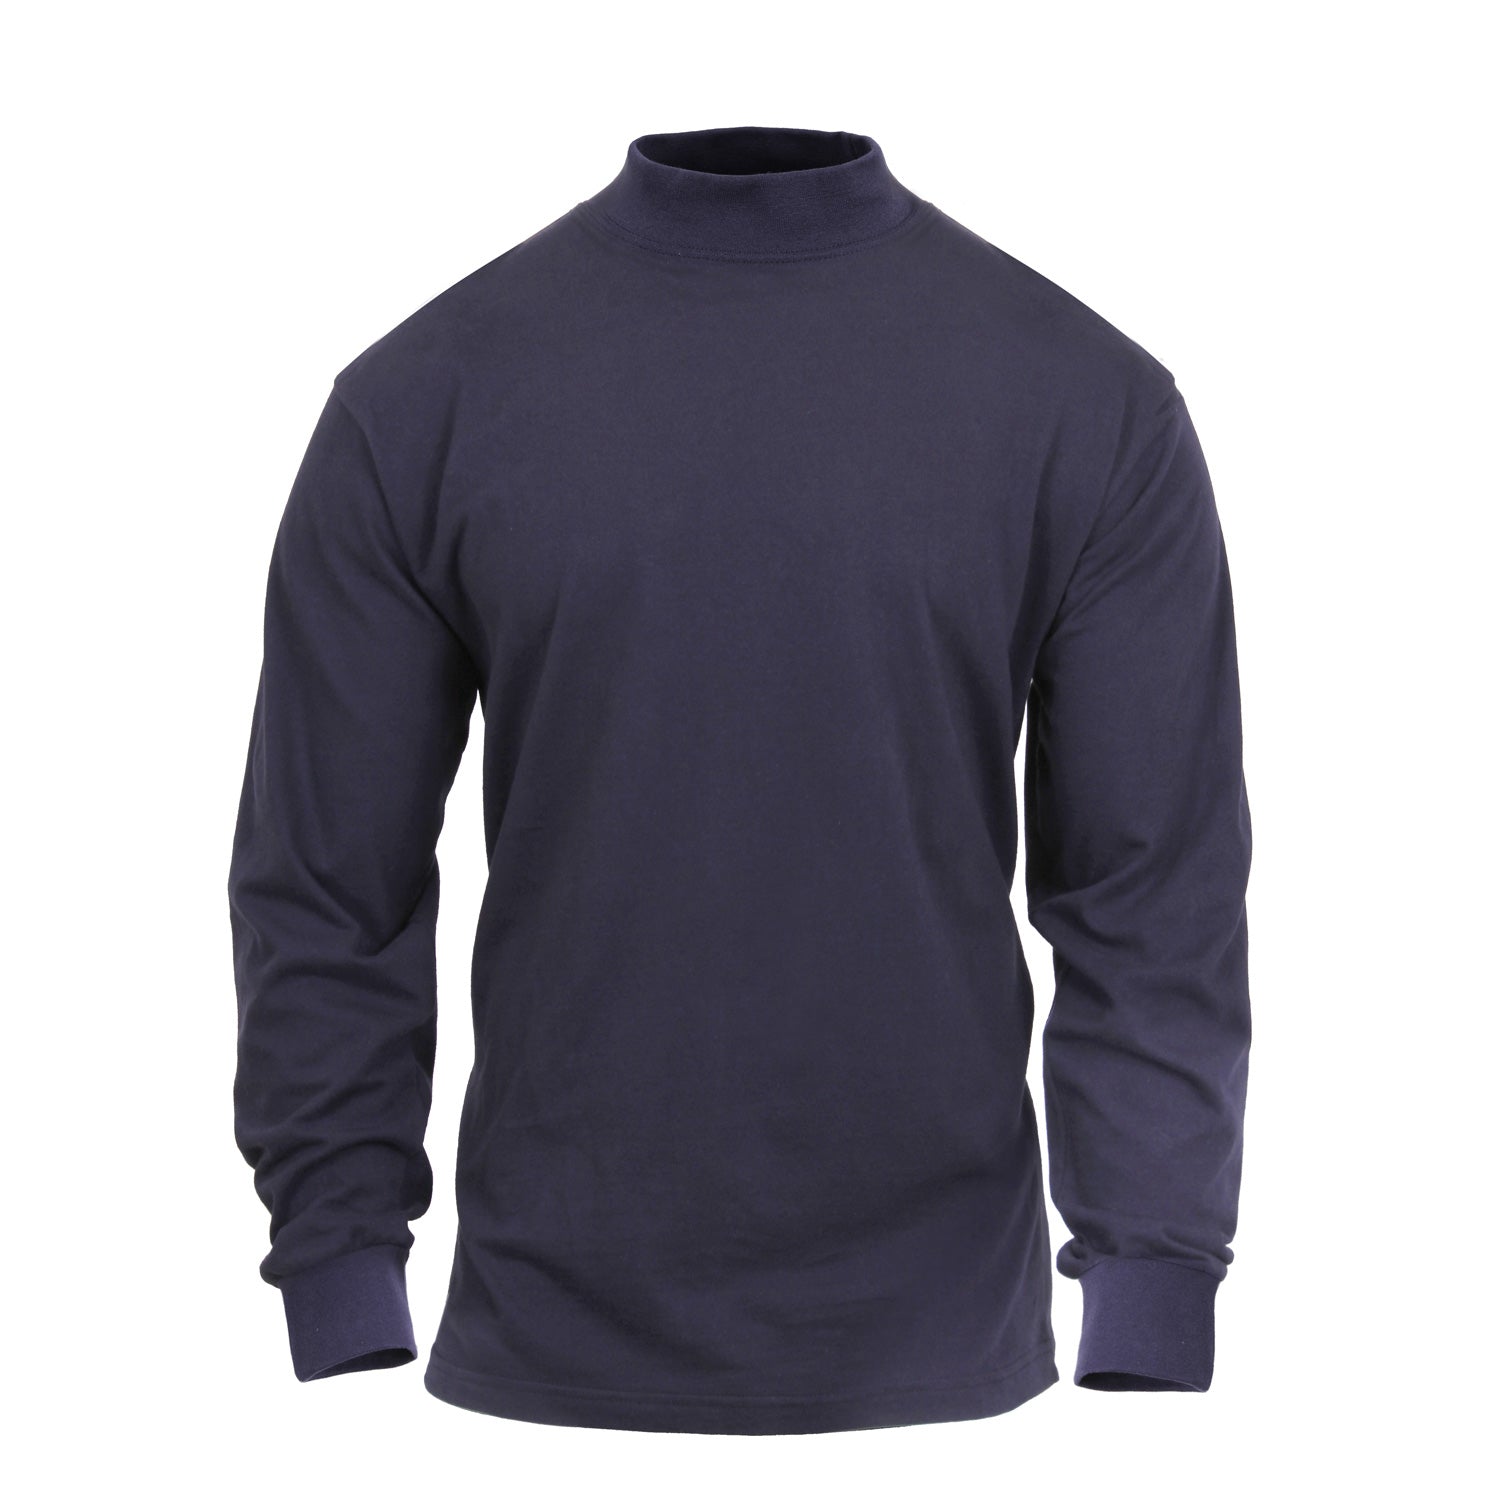 Rothco Mens Mock Turtleneck Long Sleeve Shirt - Size S - XL